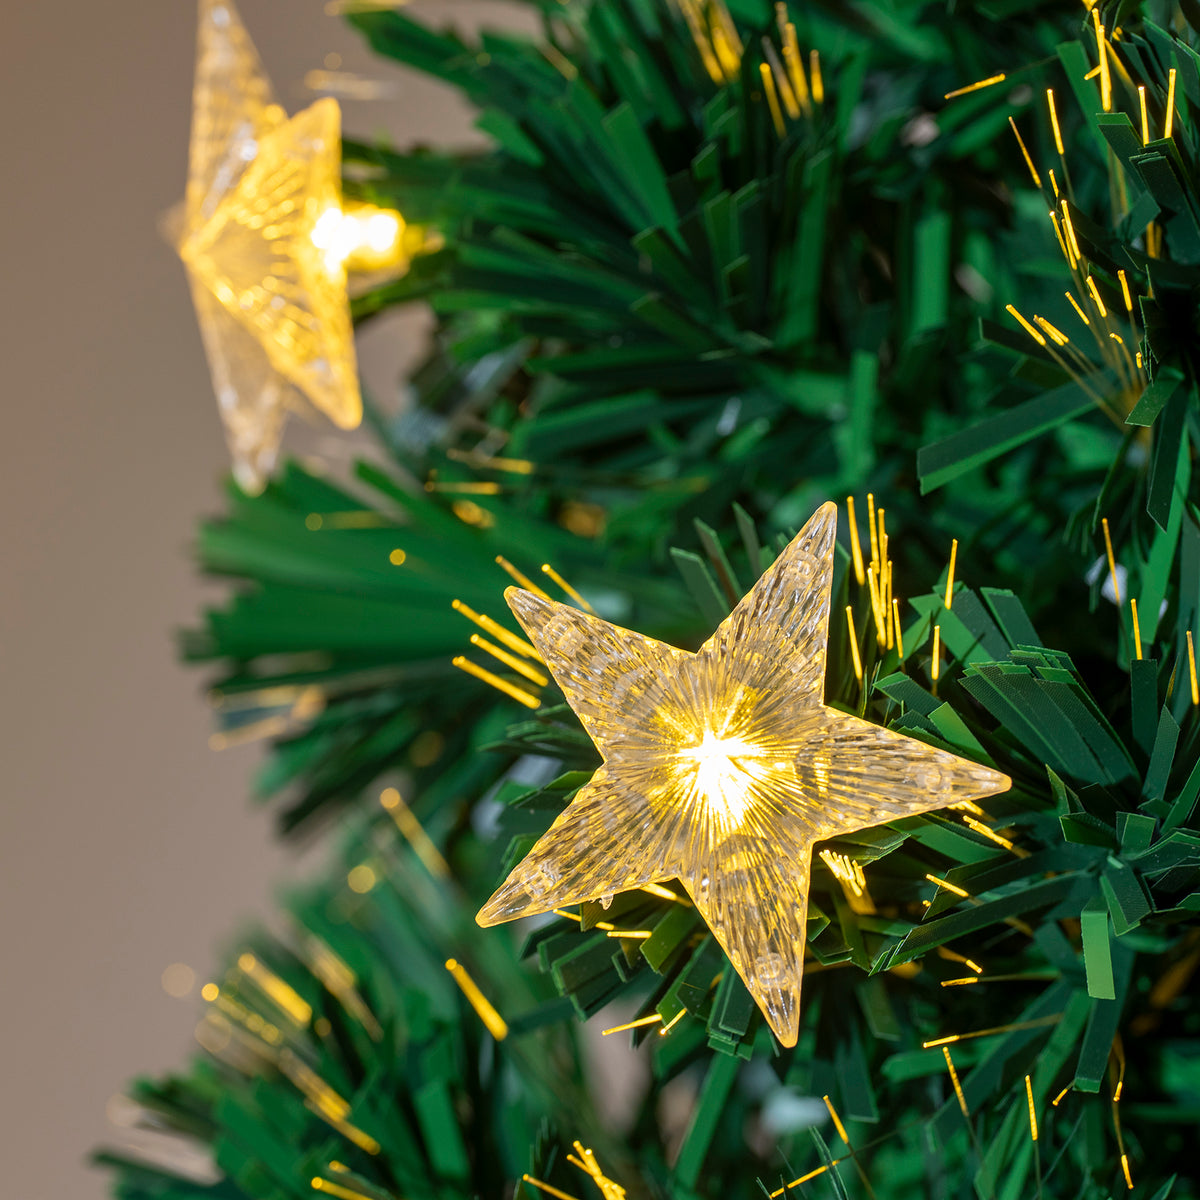 2ft - 6ft Green Fibre Optic Christmas Tree with Warm White Fibre Optics, LED Lights and Stars